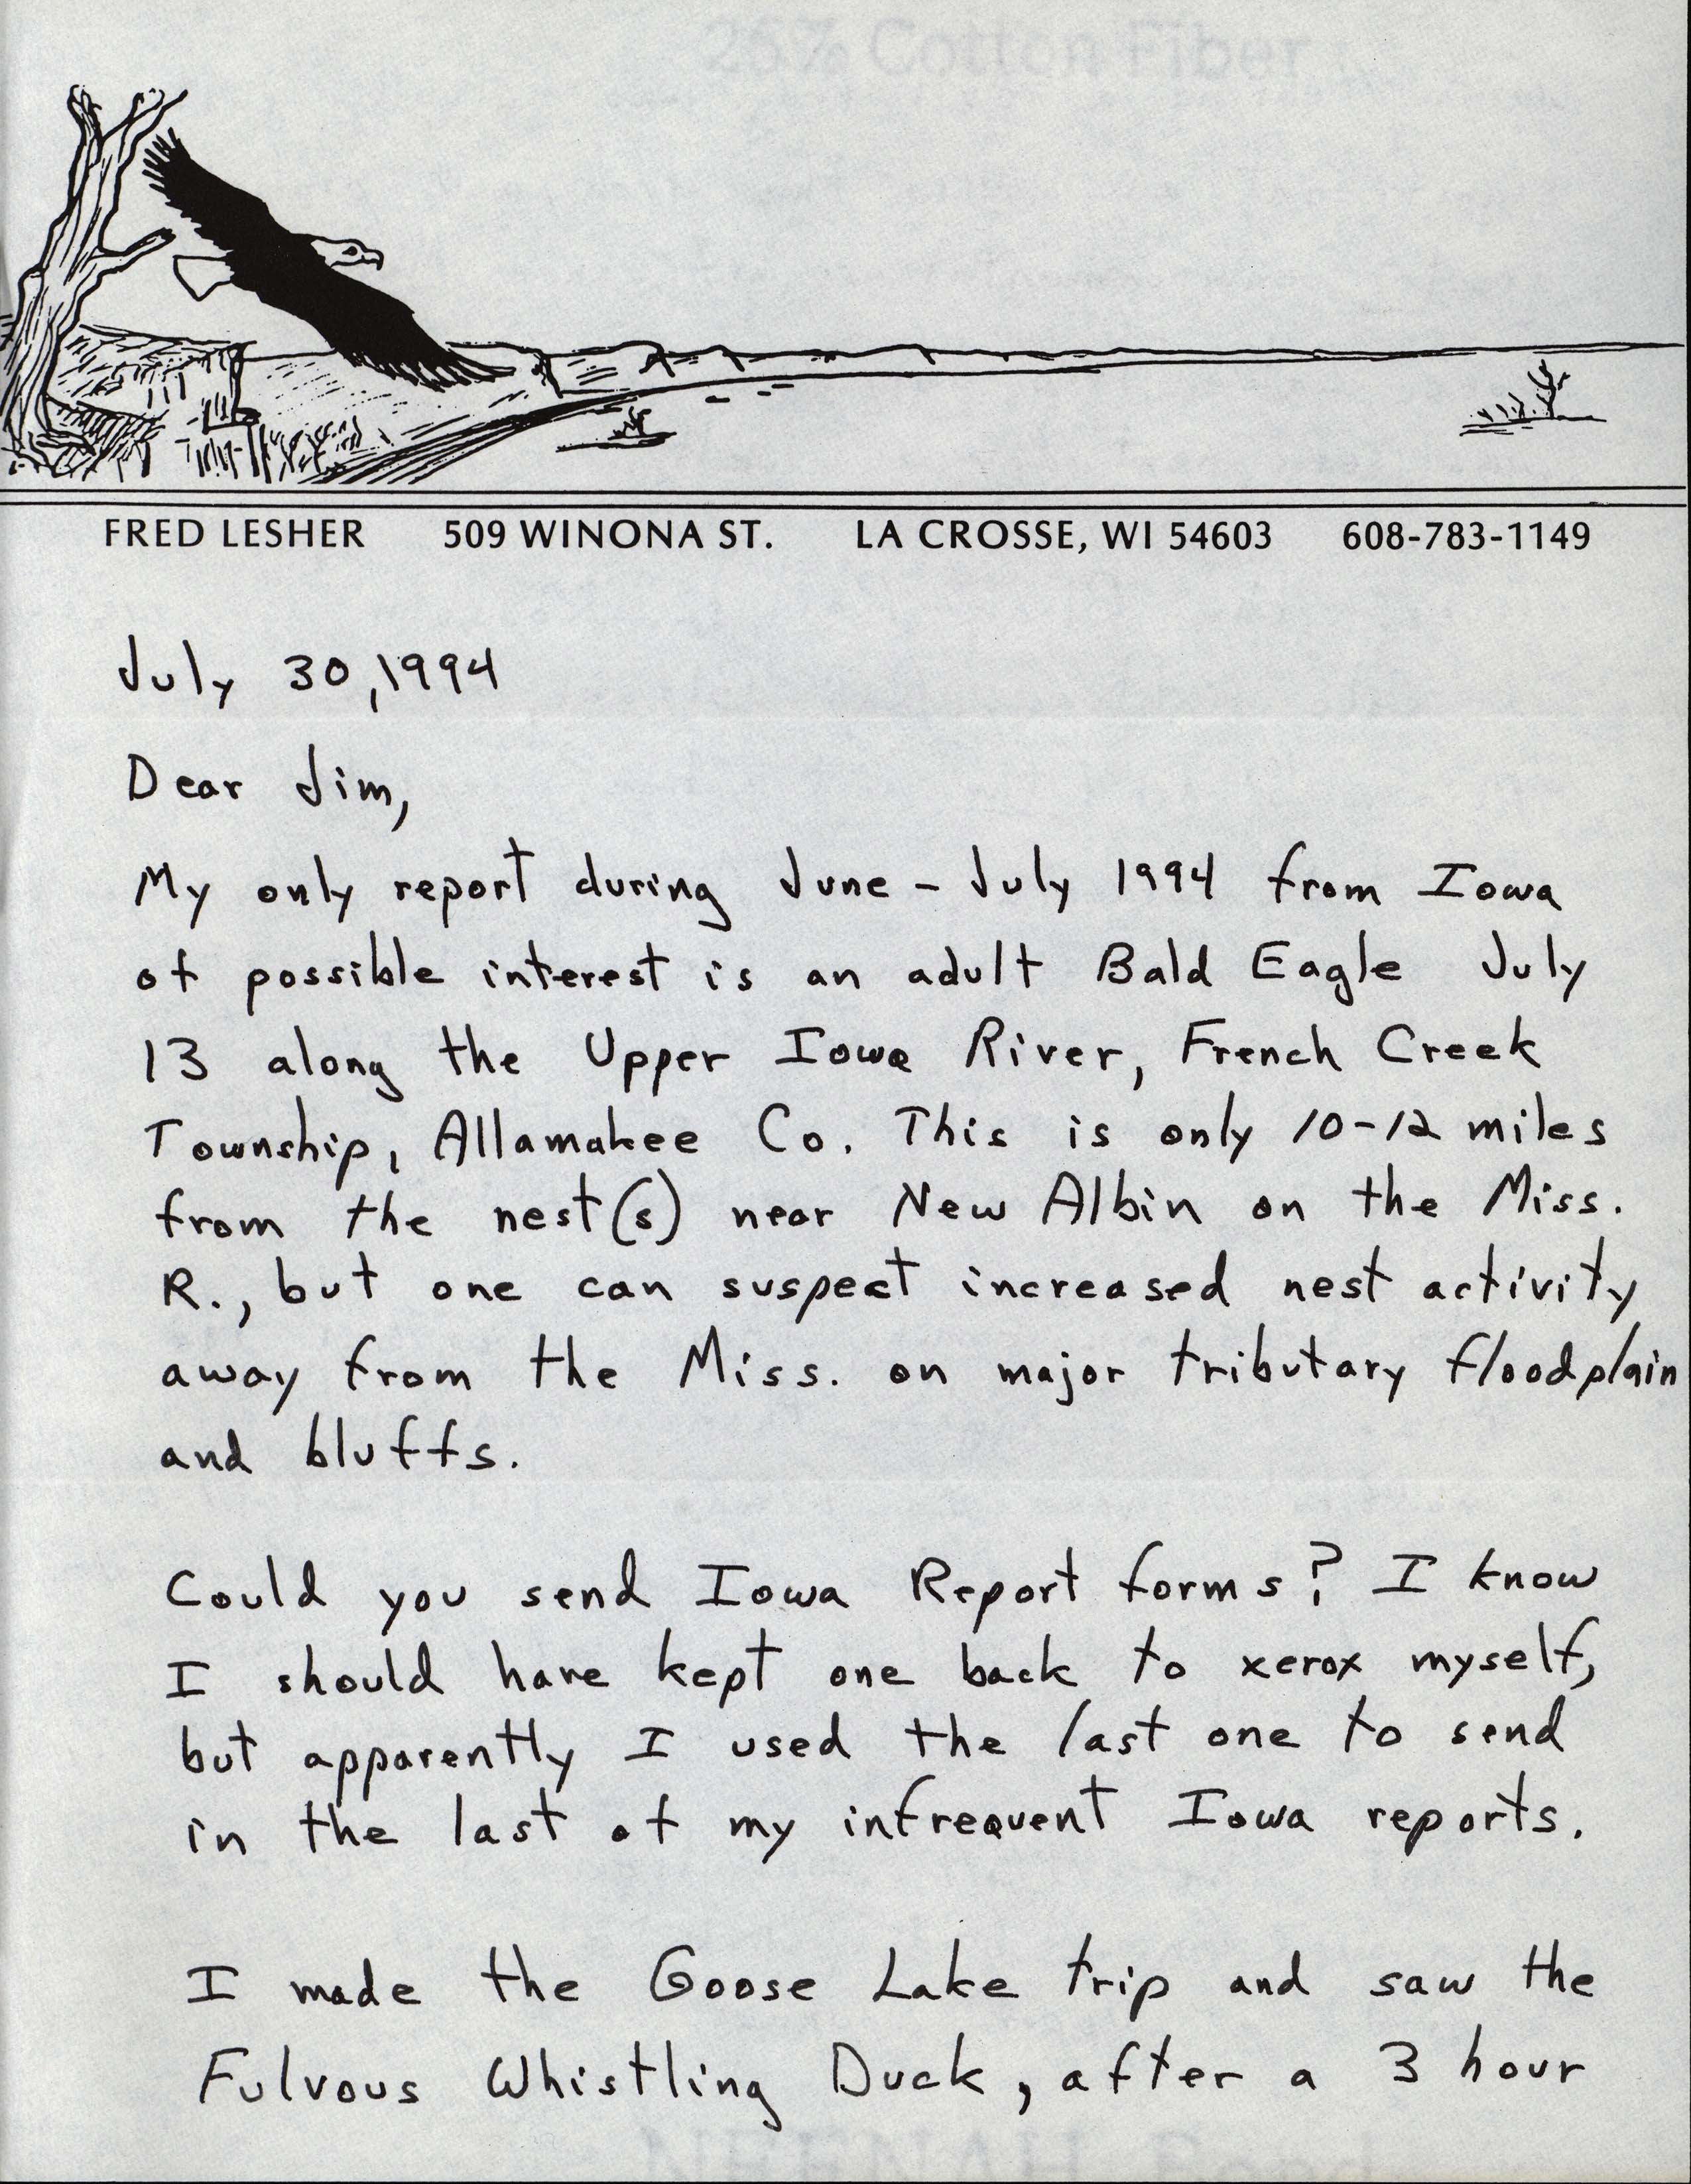 Fred Lesher letter to Jim Dinsmore regarding Bald Eagle sighting, July 30, 1994